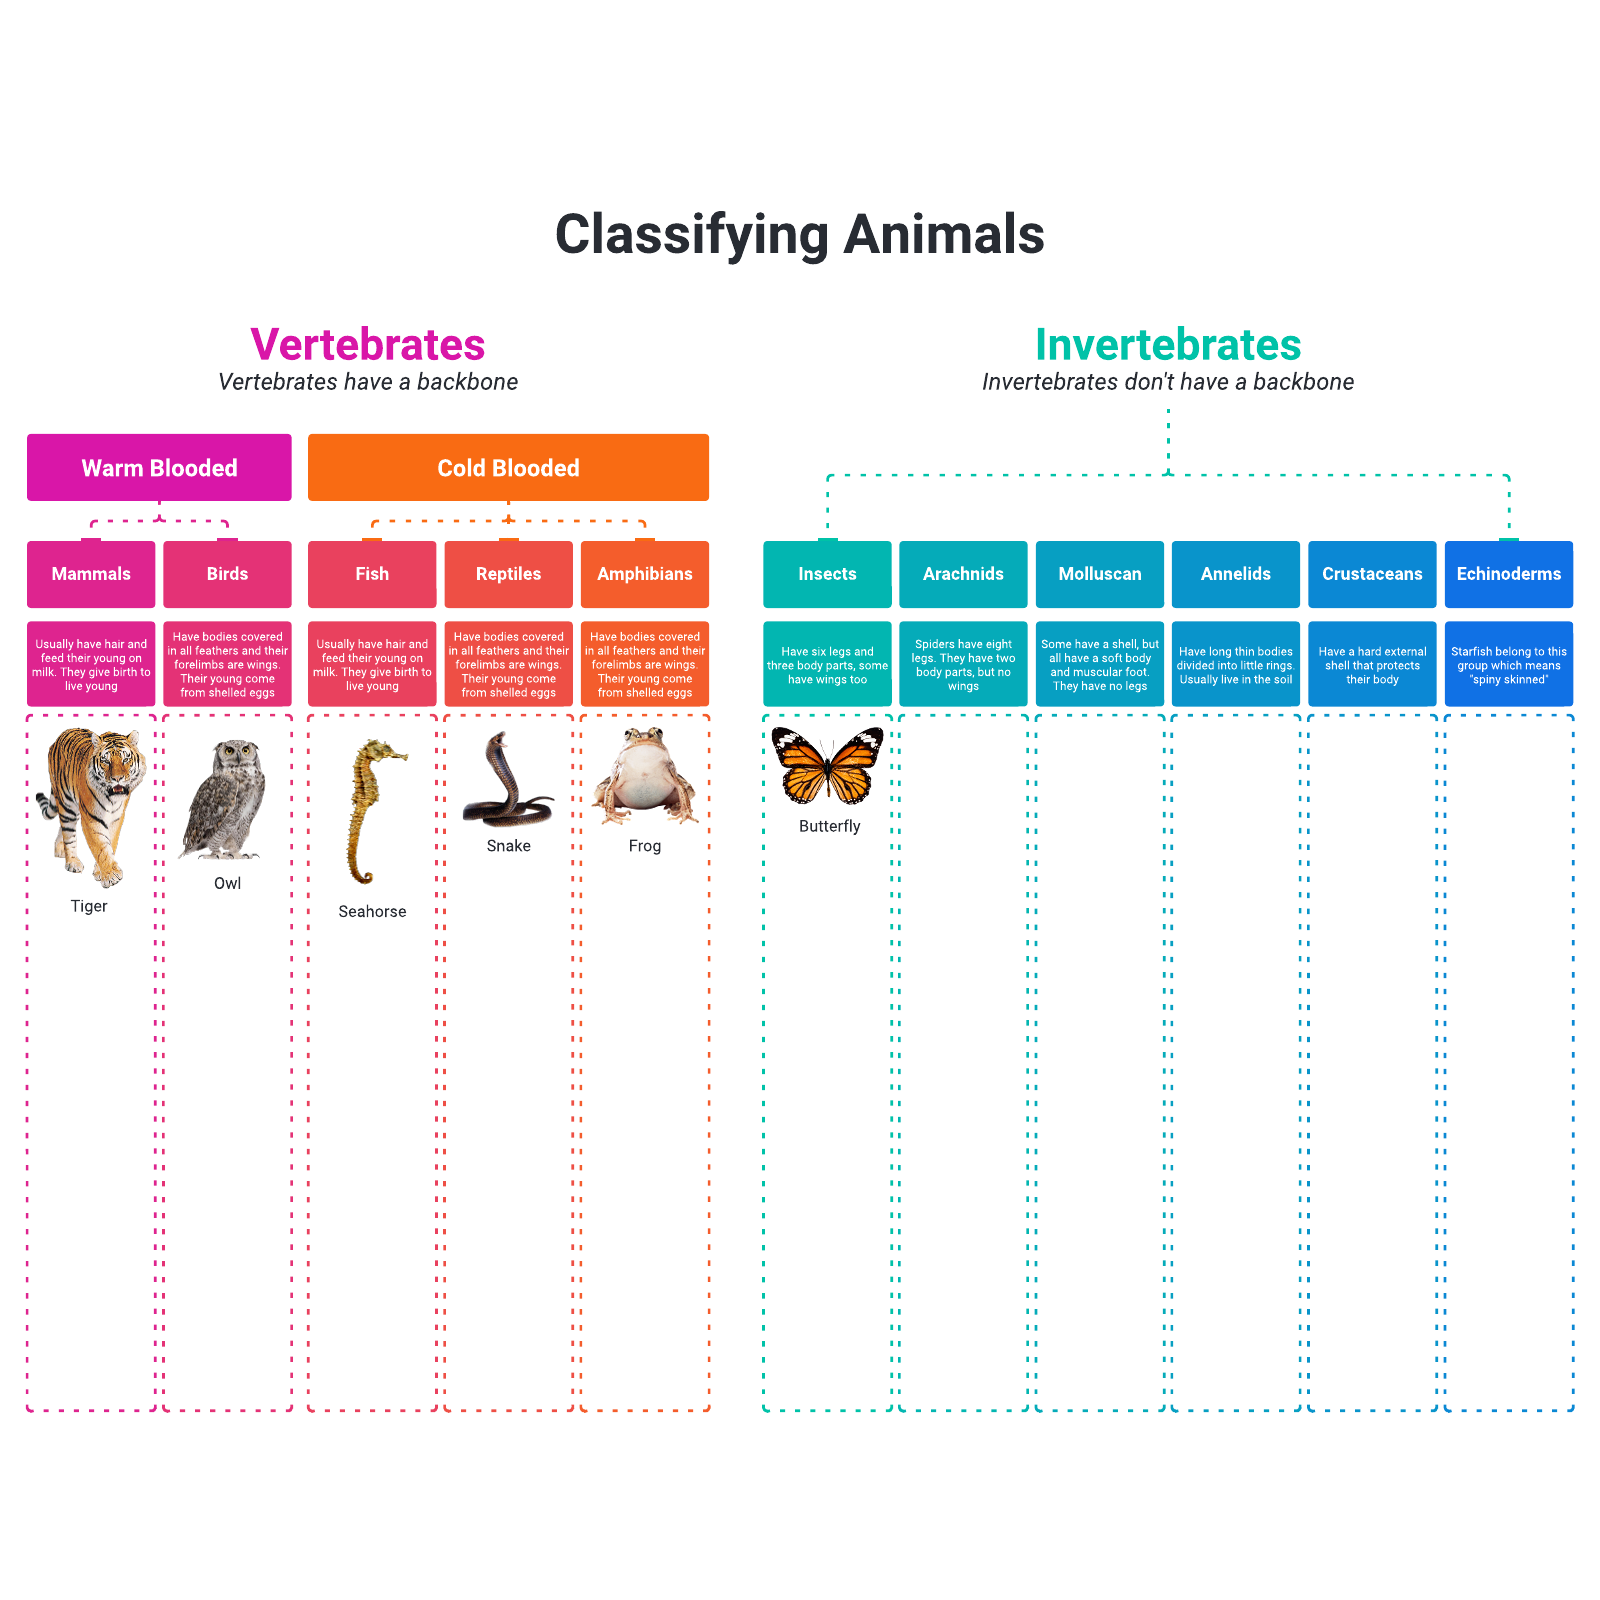 Classifying animals example